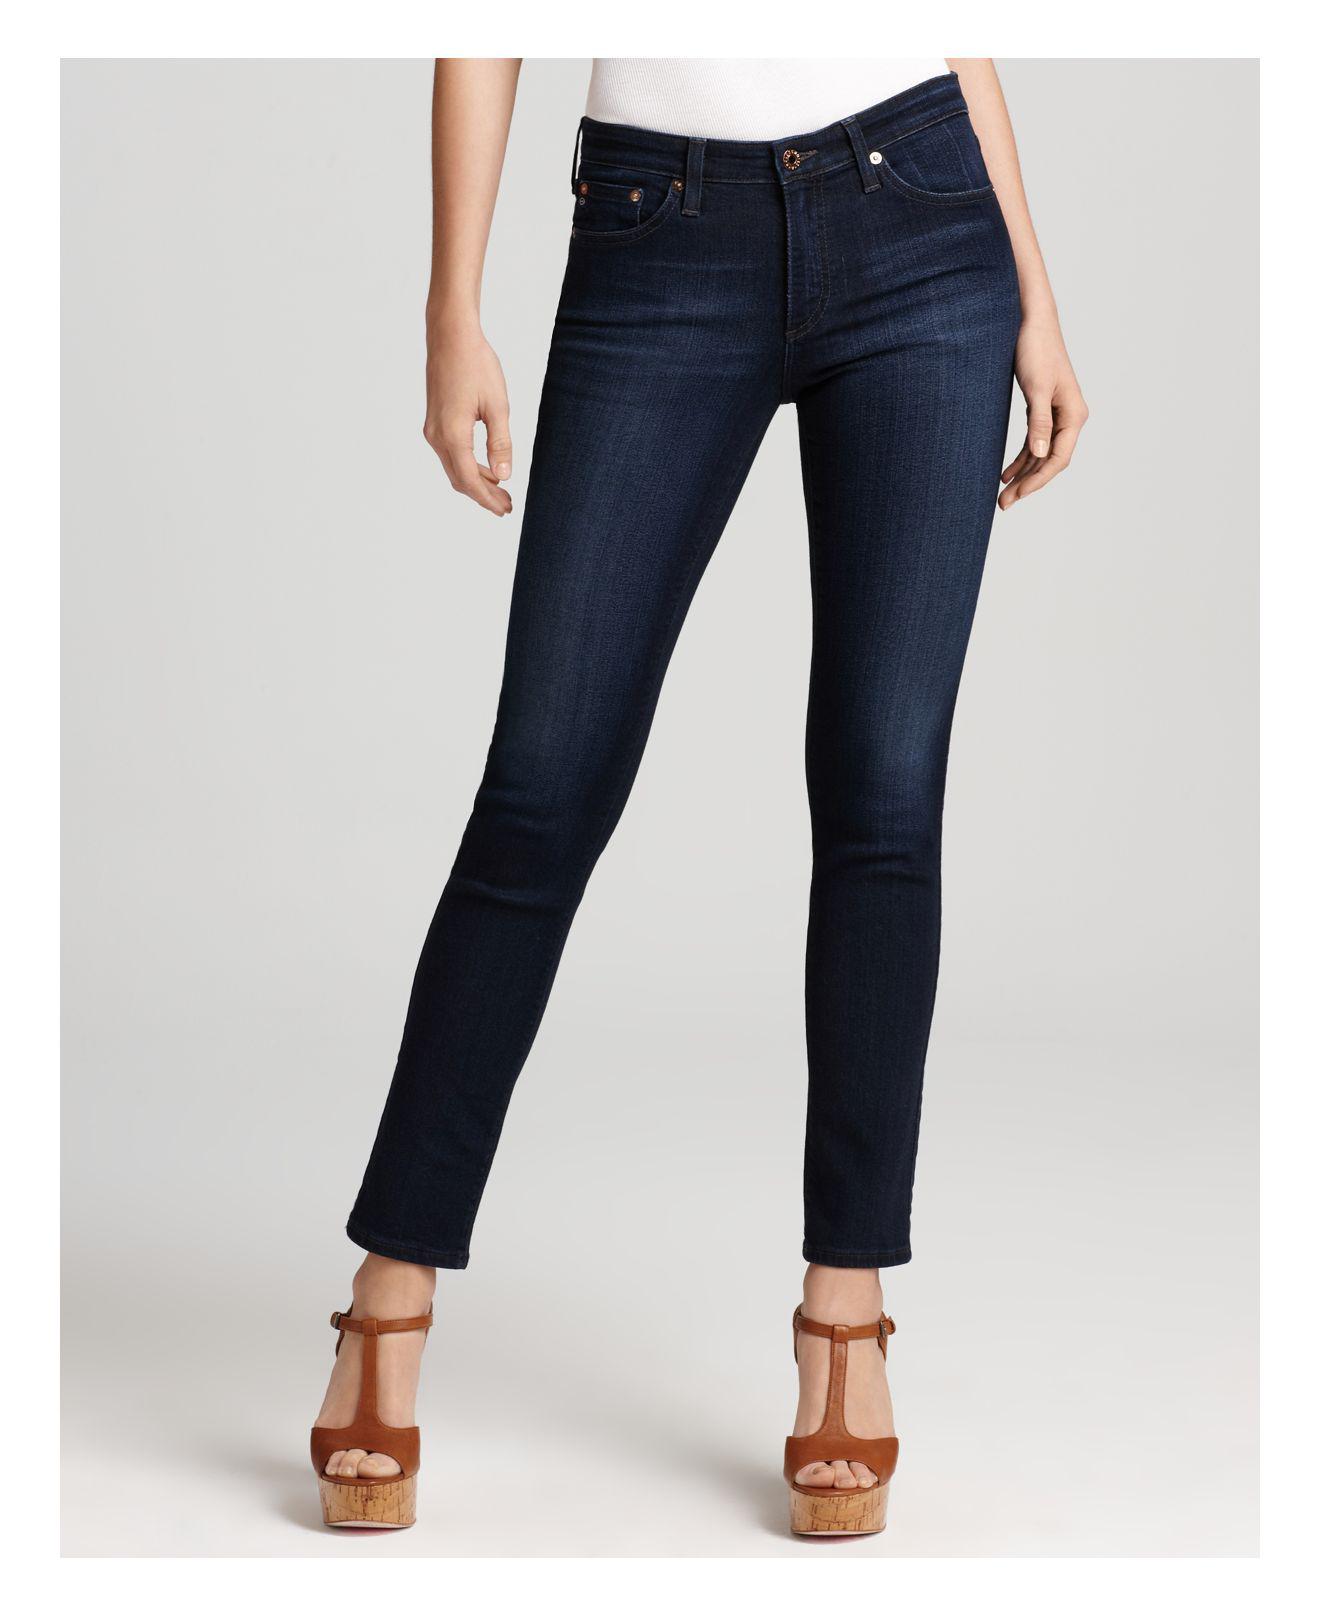 Ag jeans Prima Mid Rise Jeans In Jetsetter in Metallic | Lyst